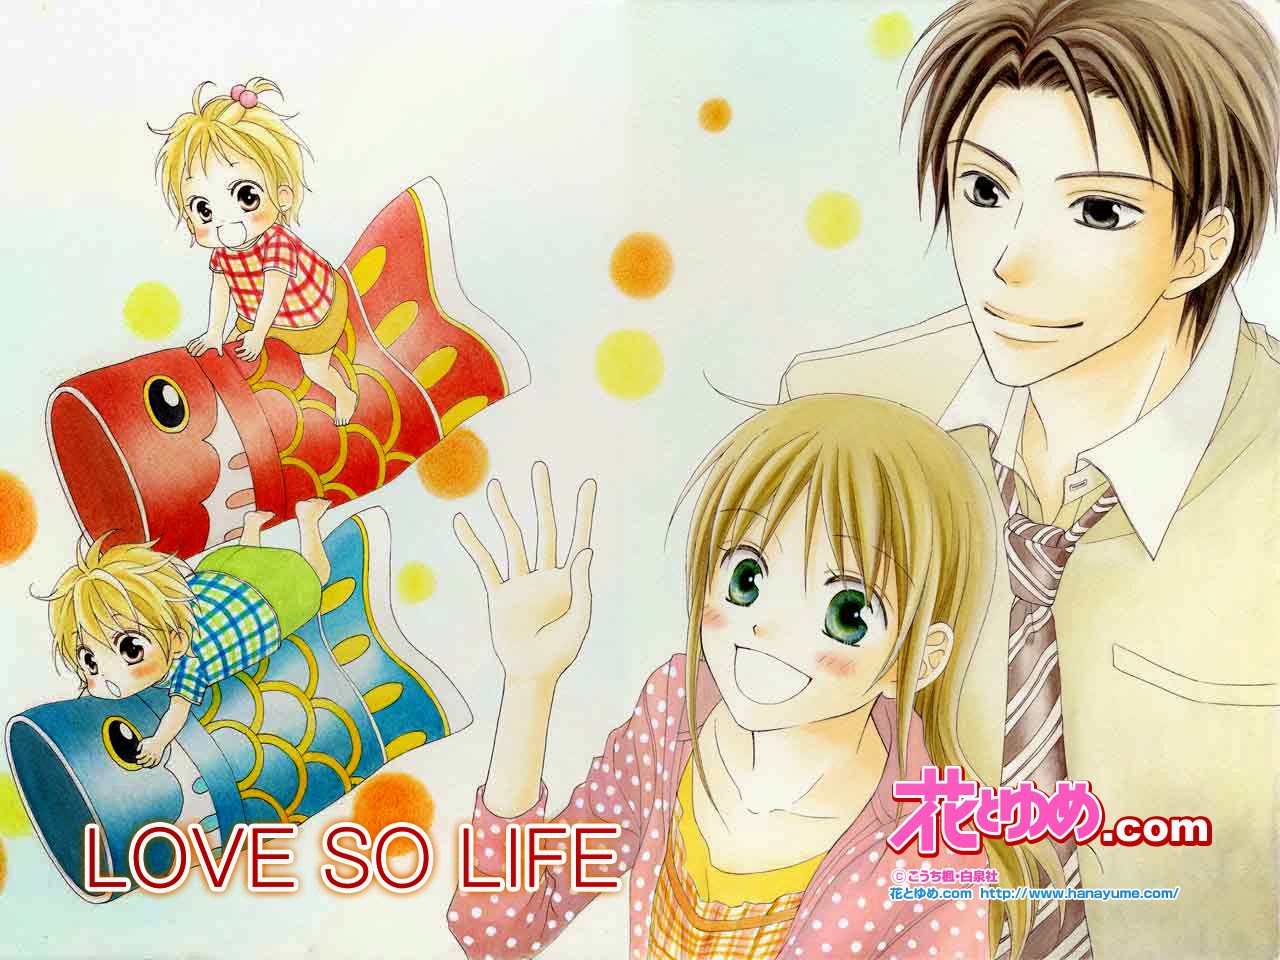 Манга жизнь так прекрасна. Манга осень длиною в жизнь. Love Life Manga. Песня лов лайф